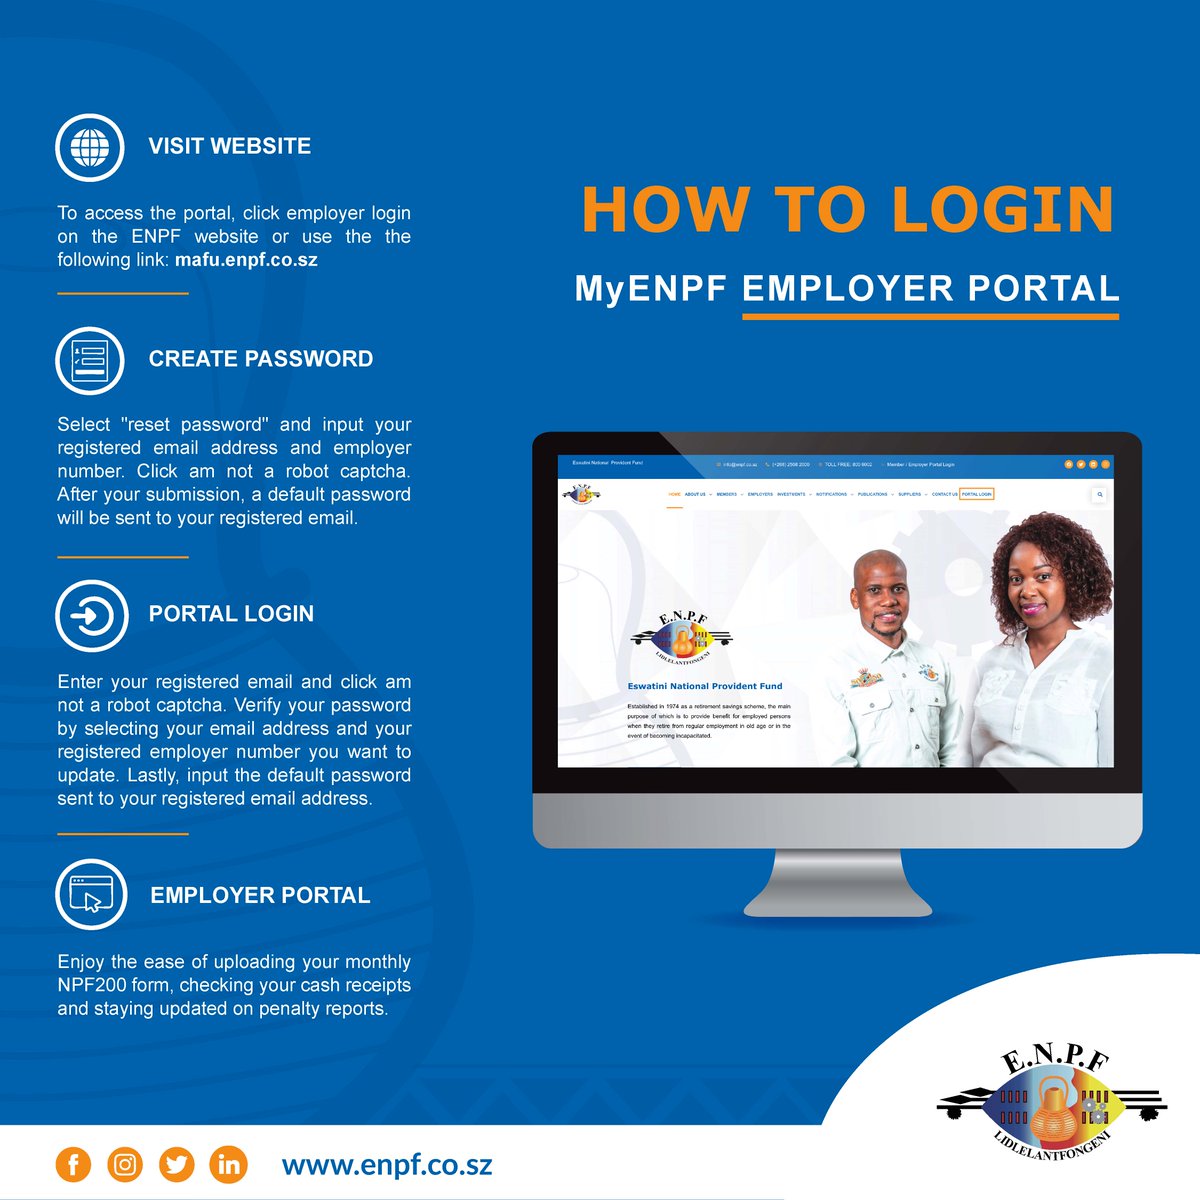 Introducing MyENPF Employer Portal, a new digital solution for your ENPF compliance needs. Here’s how you can get started!
#ENPFgoesDigital #EmployerPortal